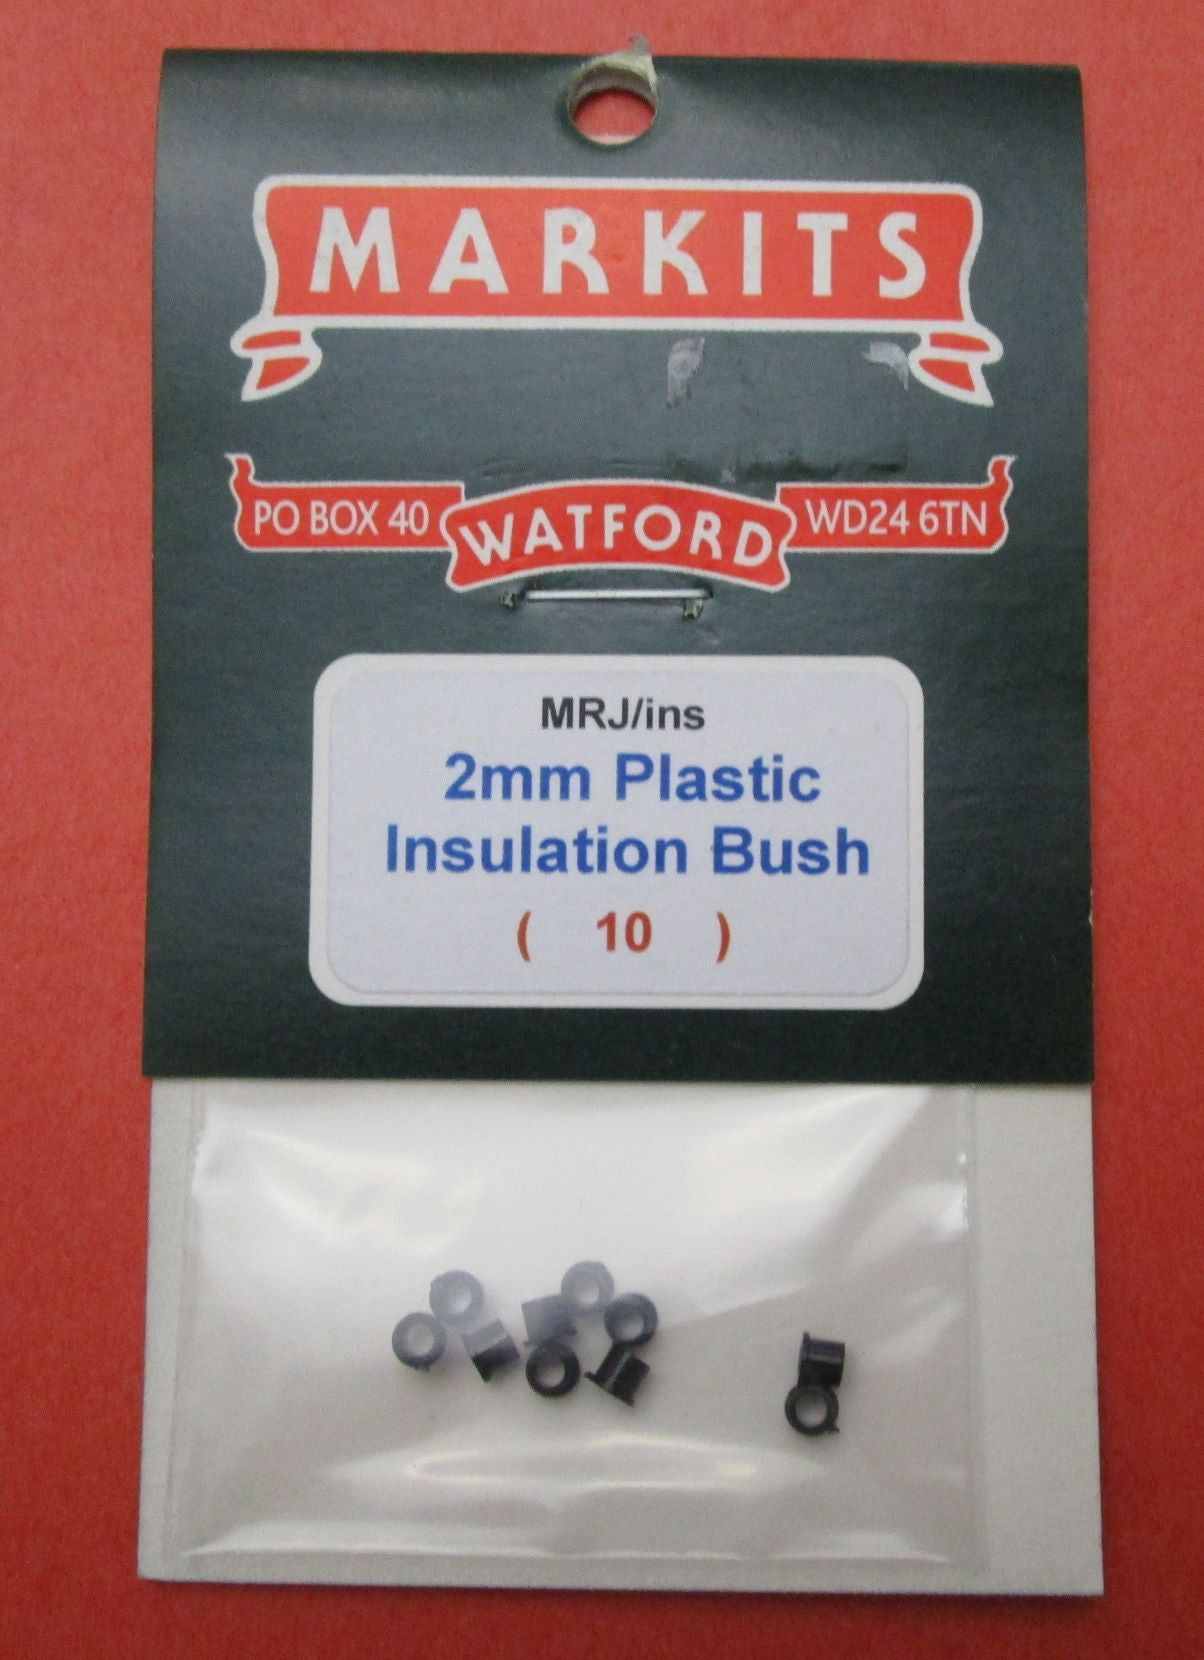 MRJ/Ins MARKITS Plastic Insulated Bush 2mm - pack of 10